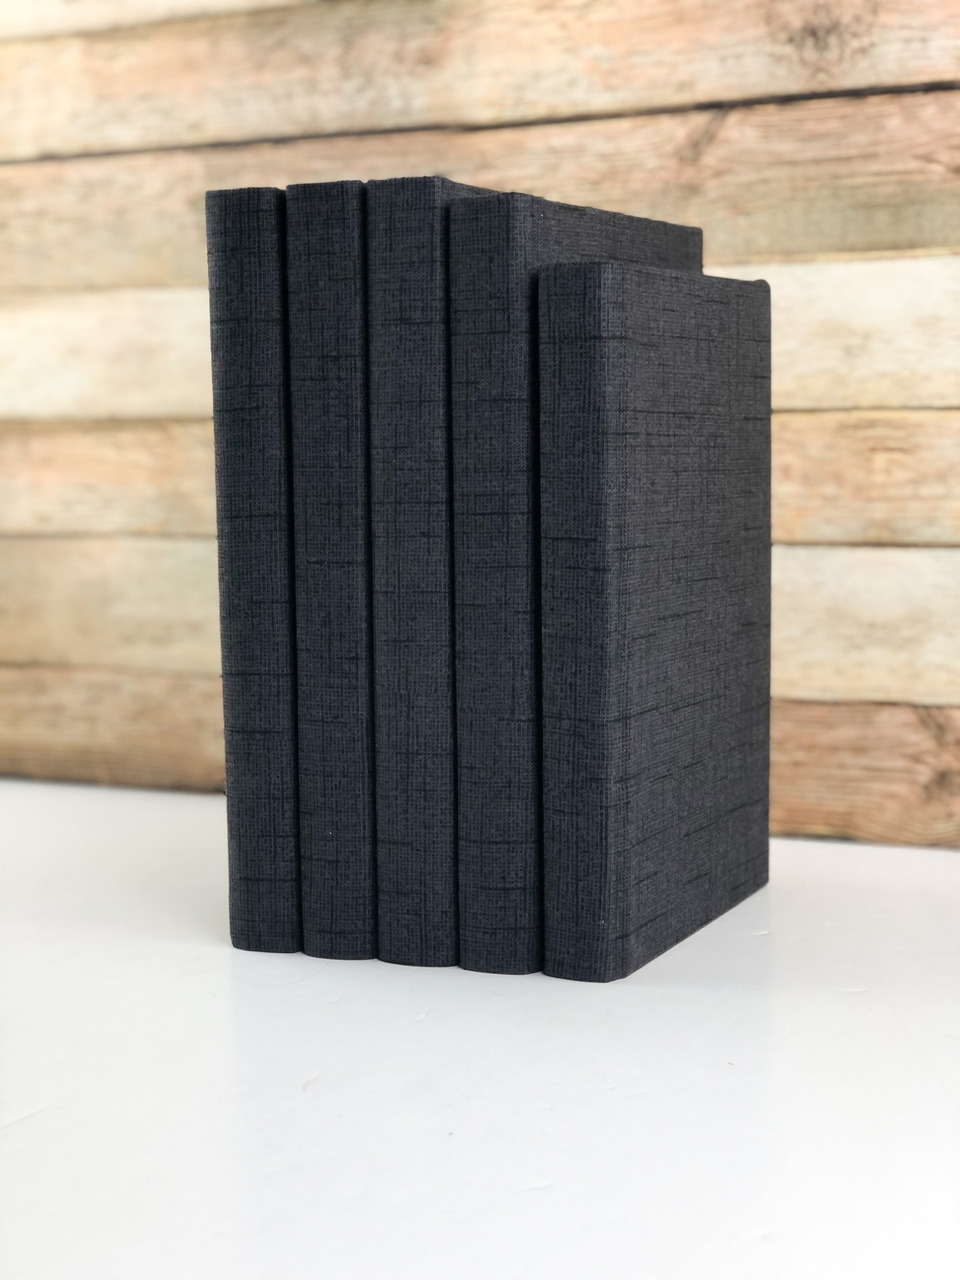 Decorative Books, Textured Black, Set of 3 - Image 1